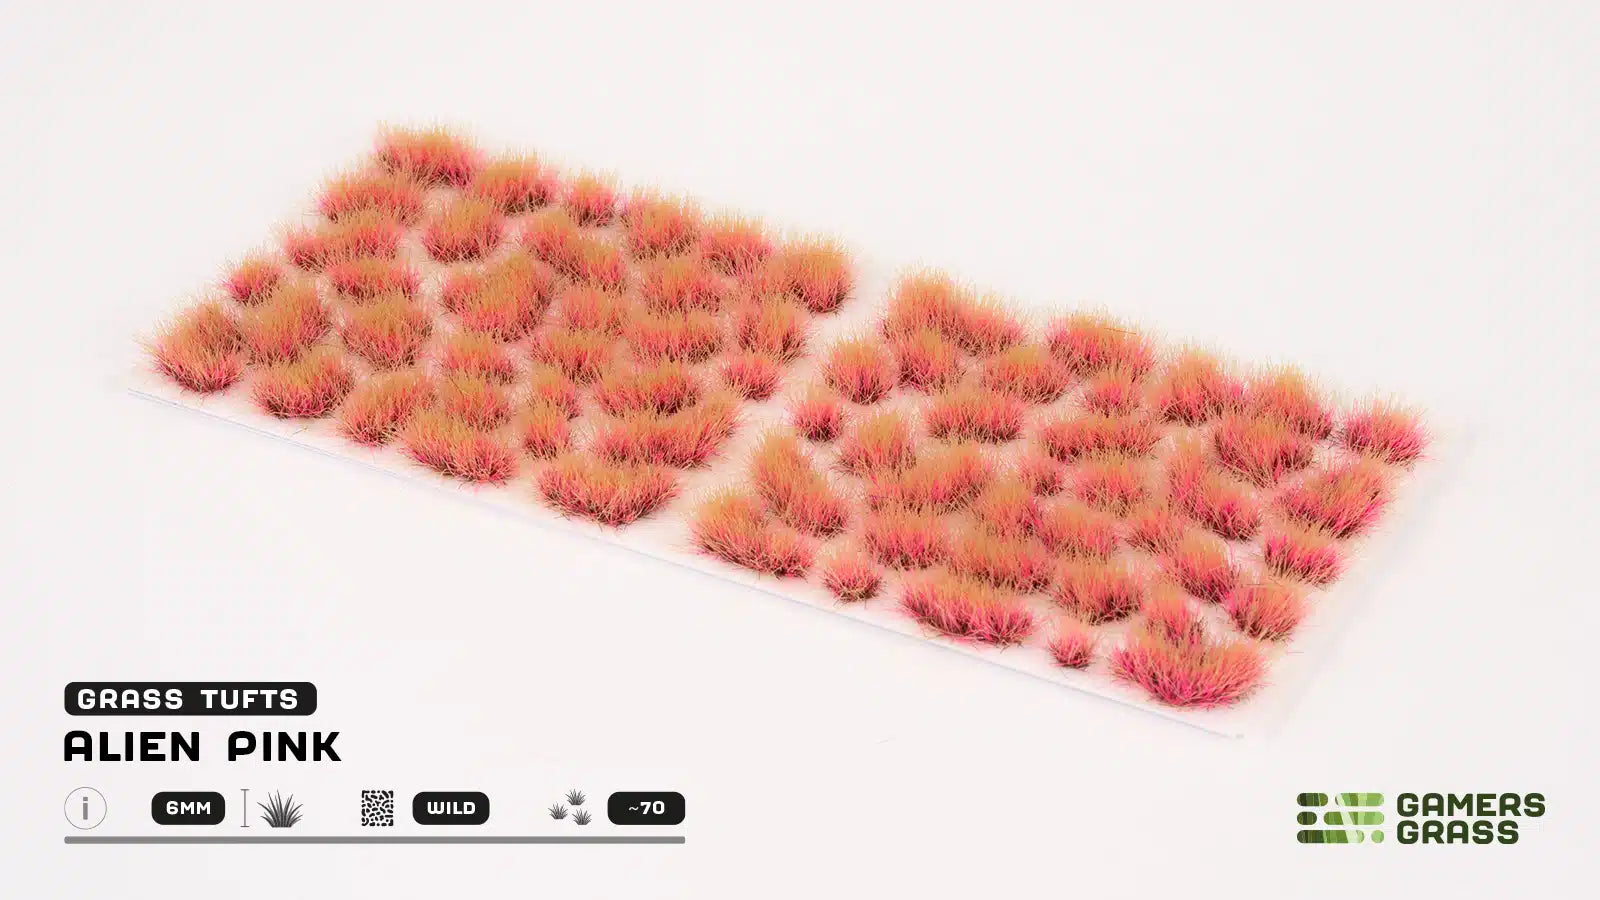 Alien Pink 6mm Tufts (Wild) - Gamers Grass